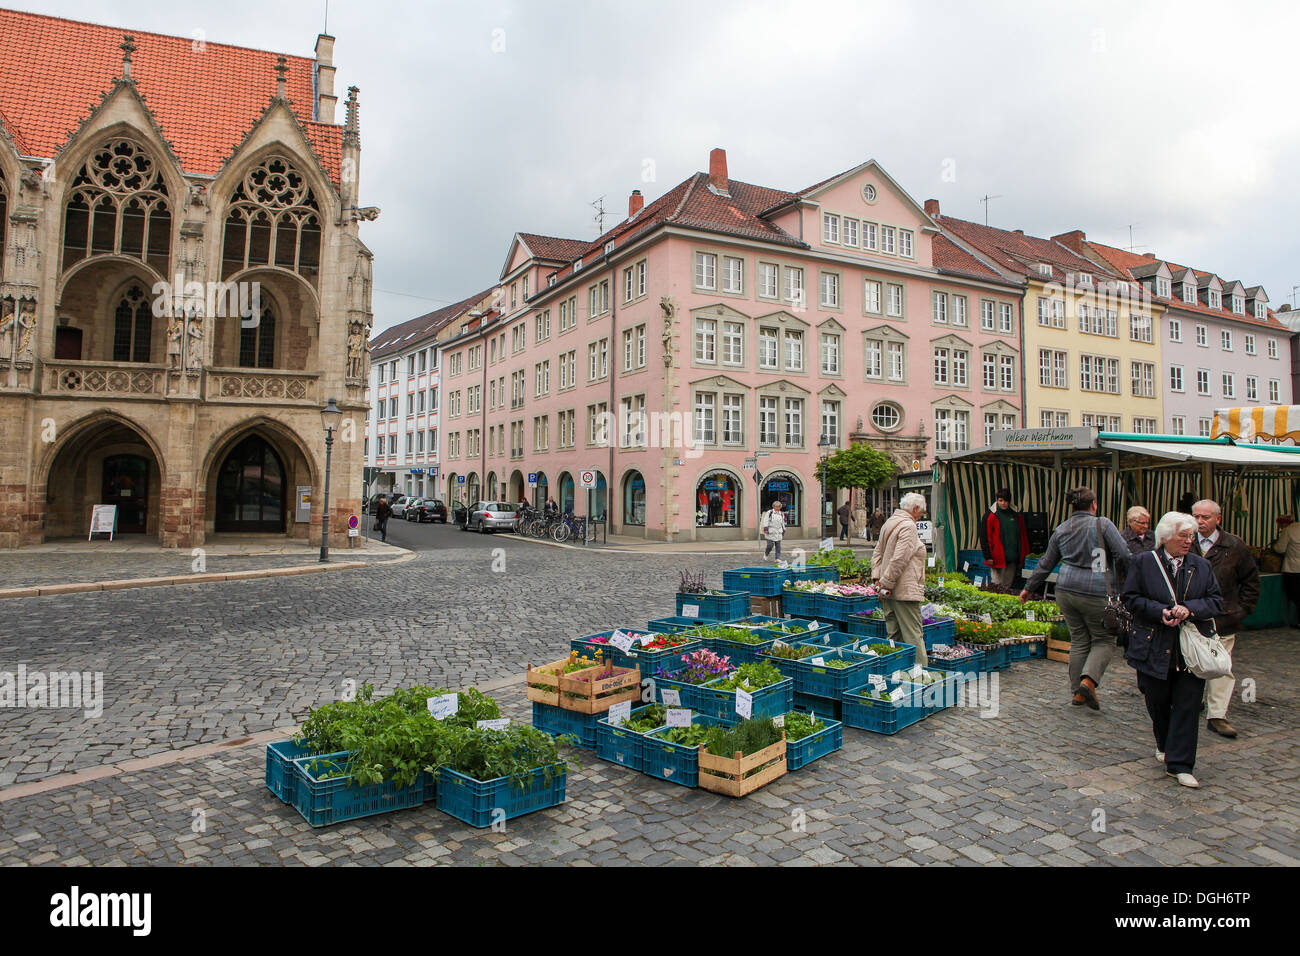 Altstadtmarkt, the square in front of the Martini church in Braunschweig, Niedersachsen, Germany Stock Photo